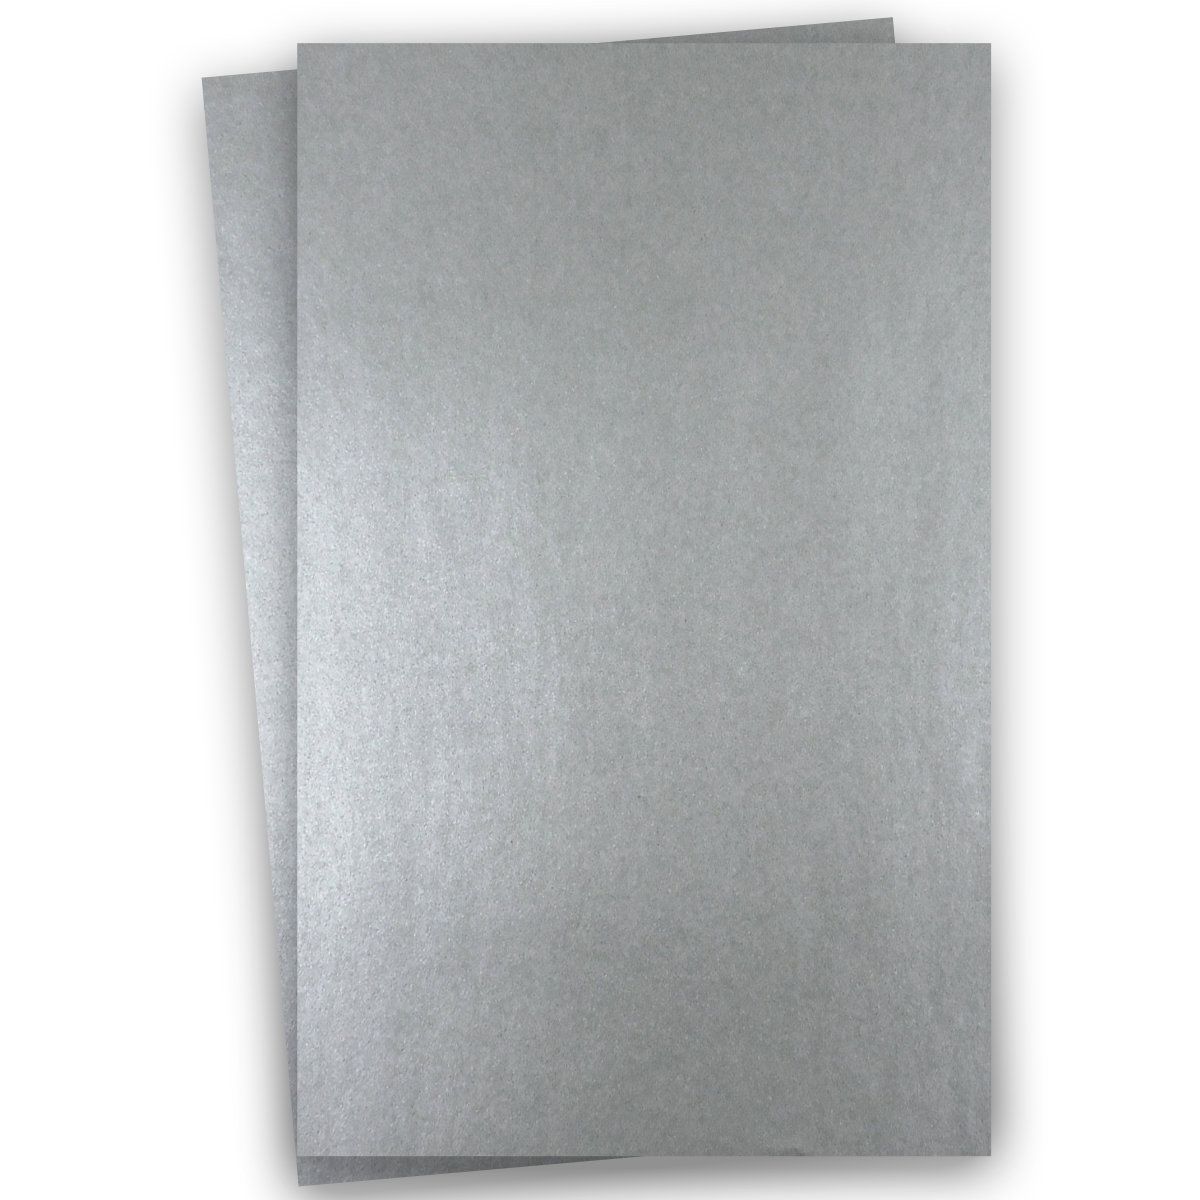 Shine BLUE SATIN - Shimmer Metallic Paper - 12x18 - 80lb Text (118gsm) - 20